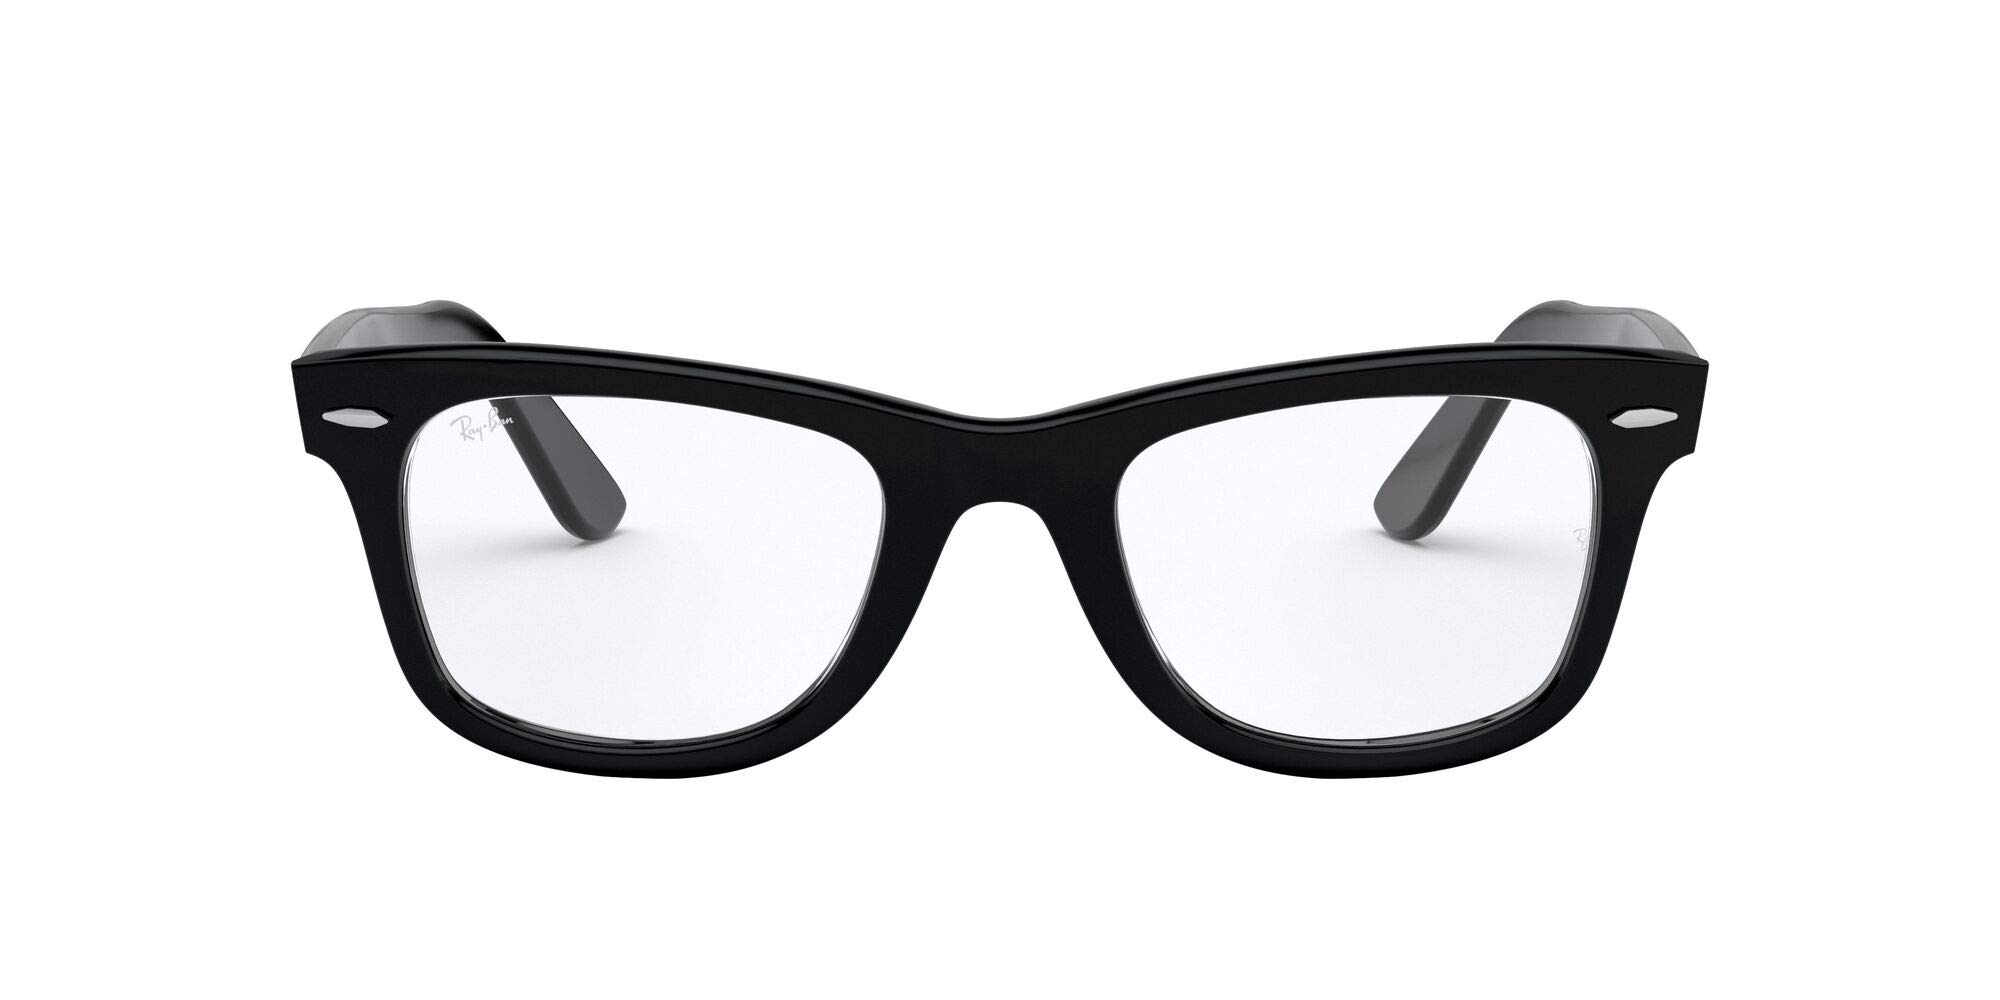 Ray-Ban RX5121 Wayfarer Square Prescription Eyeglass Frames, Black/Demo Lens, 50 mm